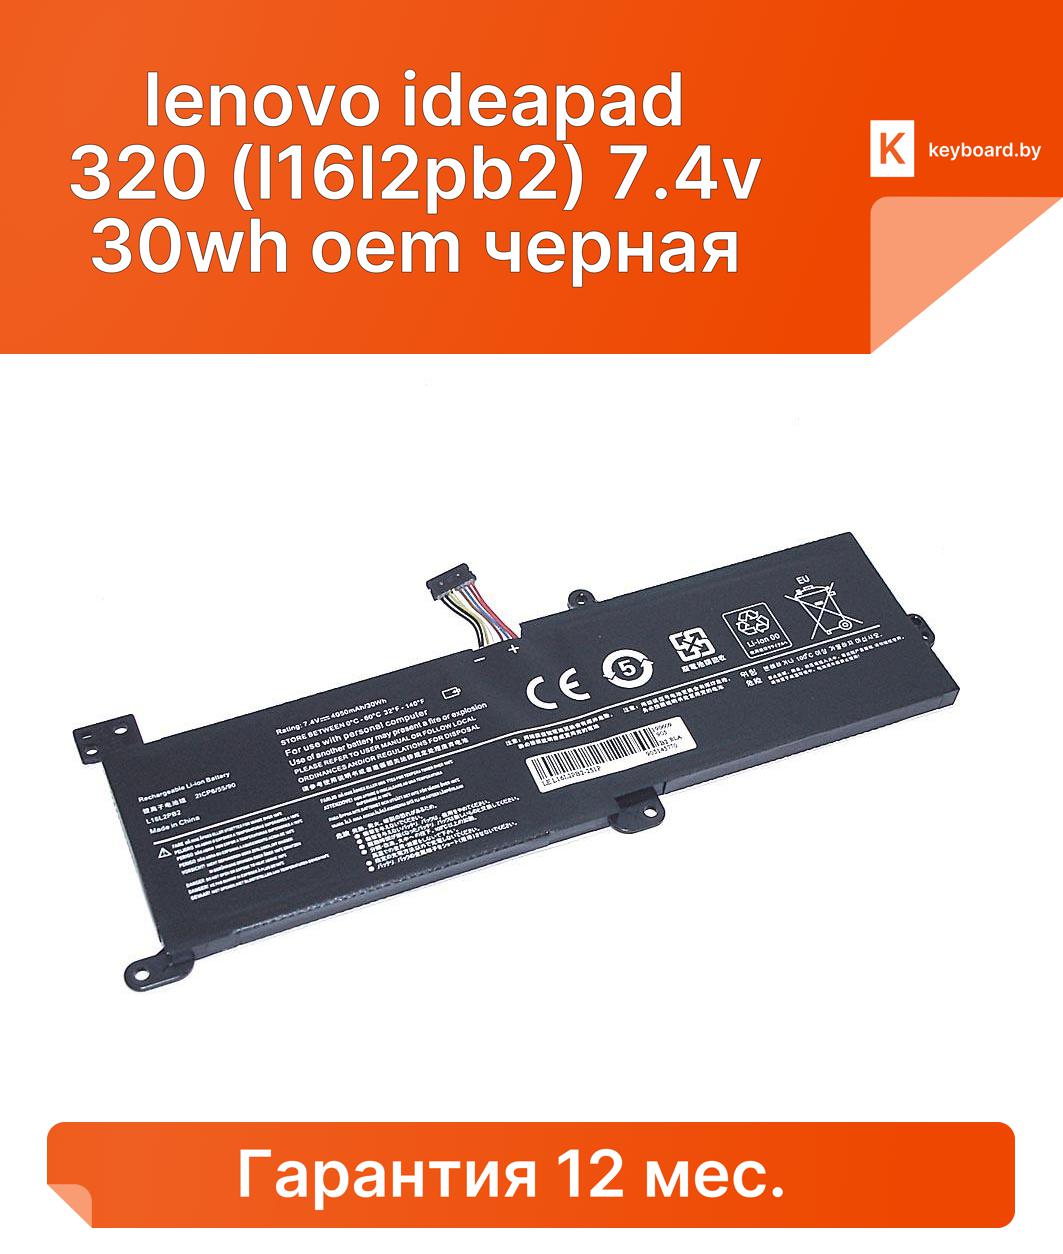 Аккумуляторная батарея для ноутбука lenovo ideapad 320 (l16l2pb2) 7.4v 30wh oem черная